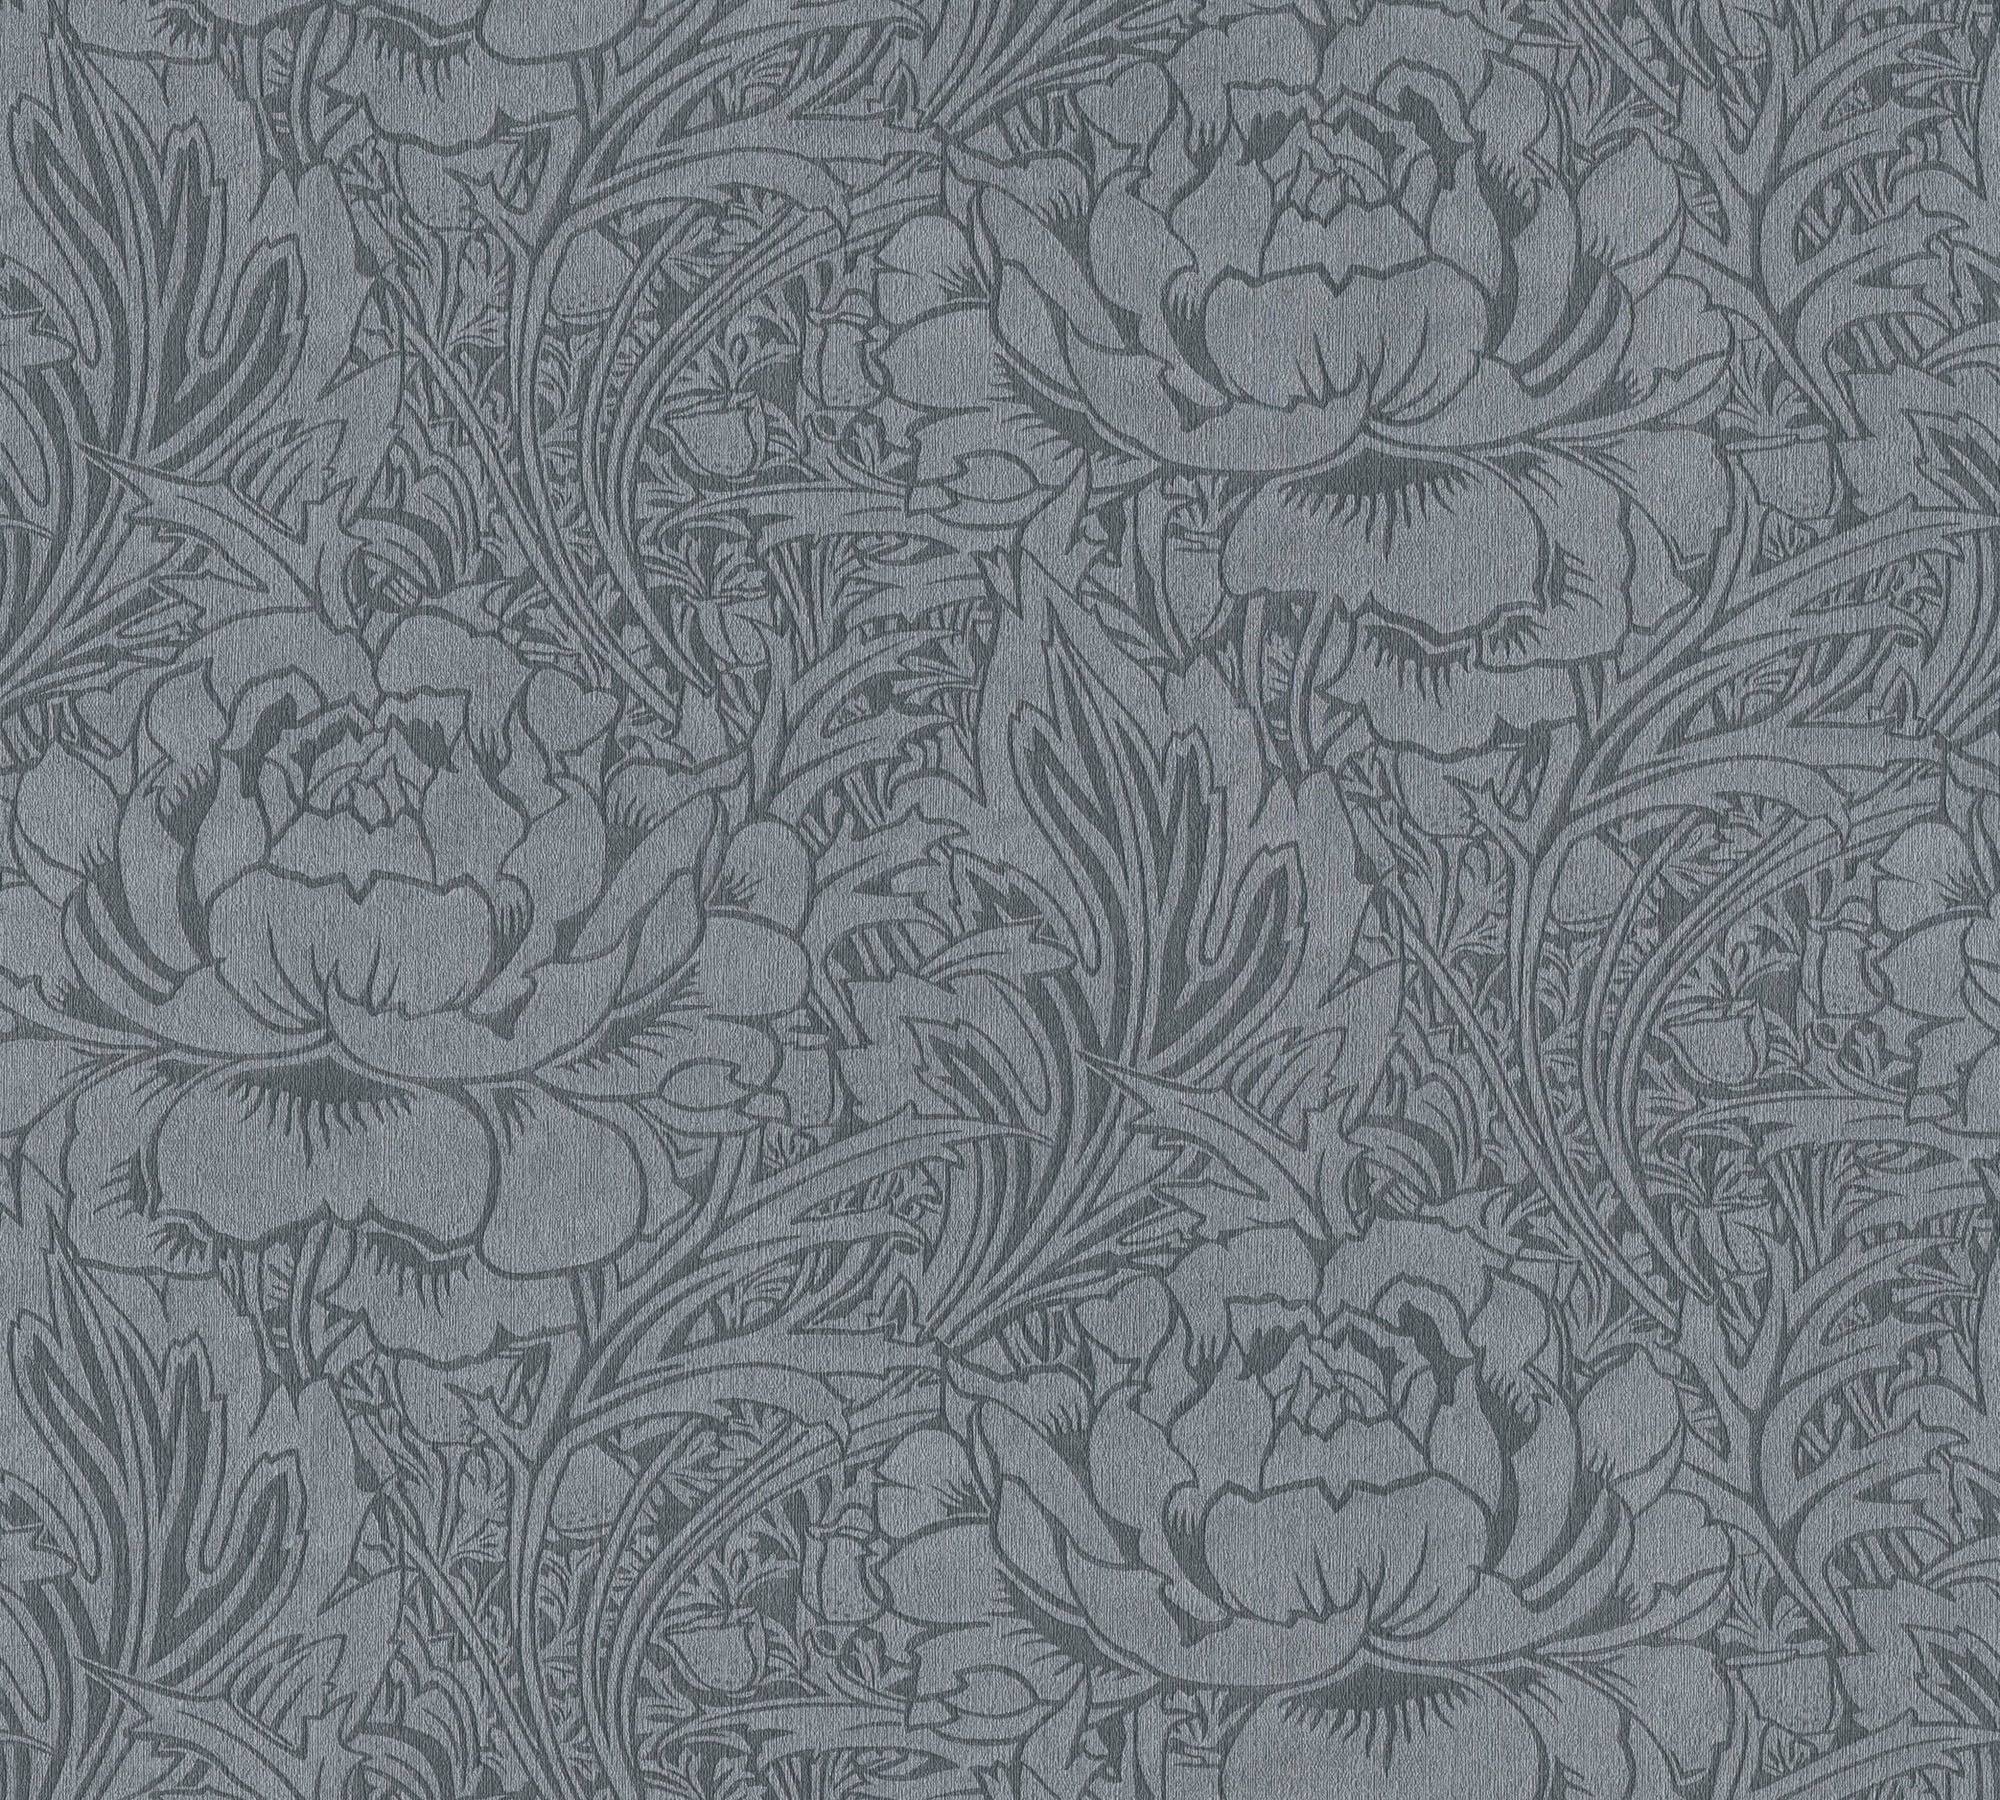 【Favorit】 living walls Vliestapete Mata Hari, strukturiert, geblümt, Tapete Blumen grau/grau floral, natürlich, Florale